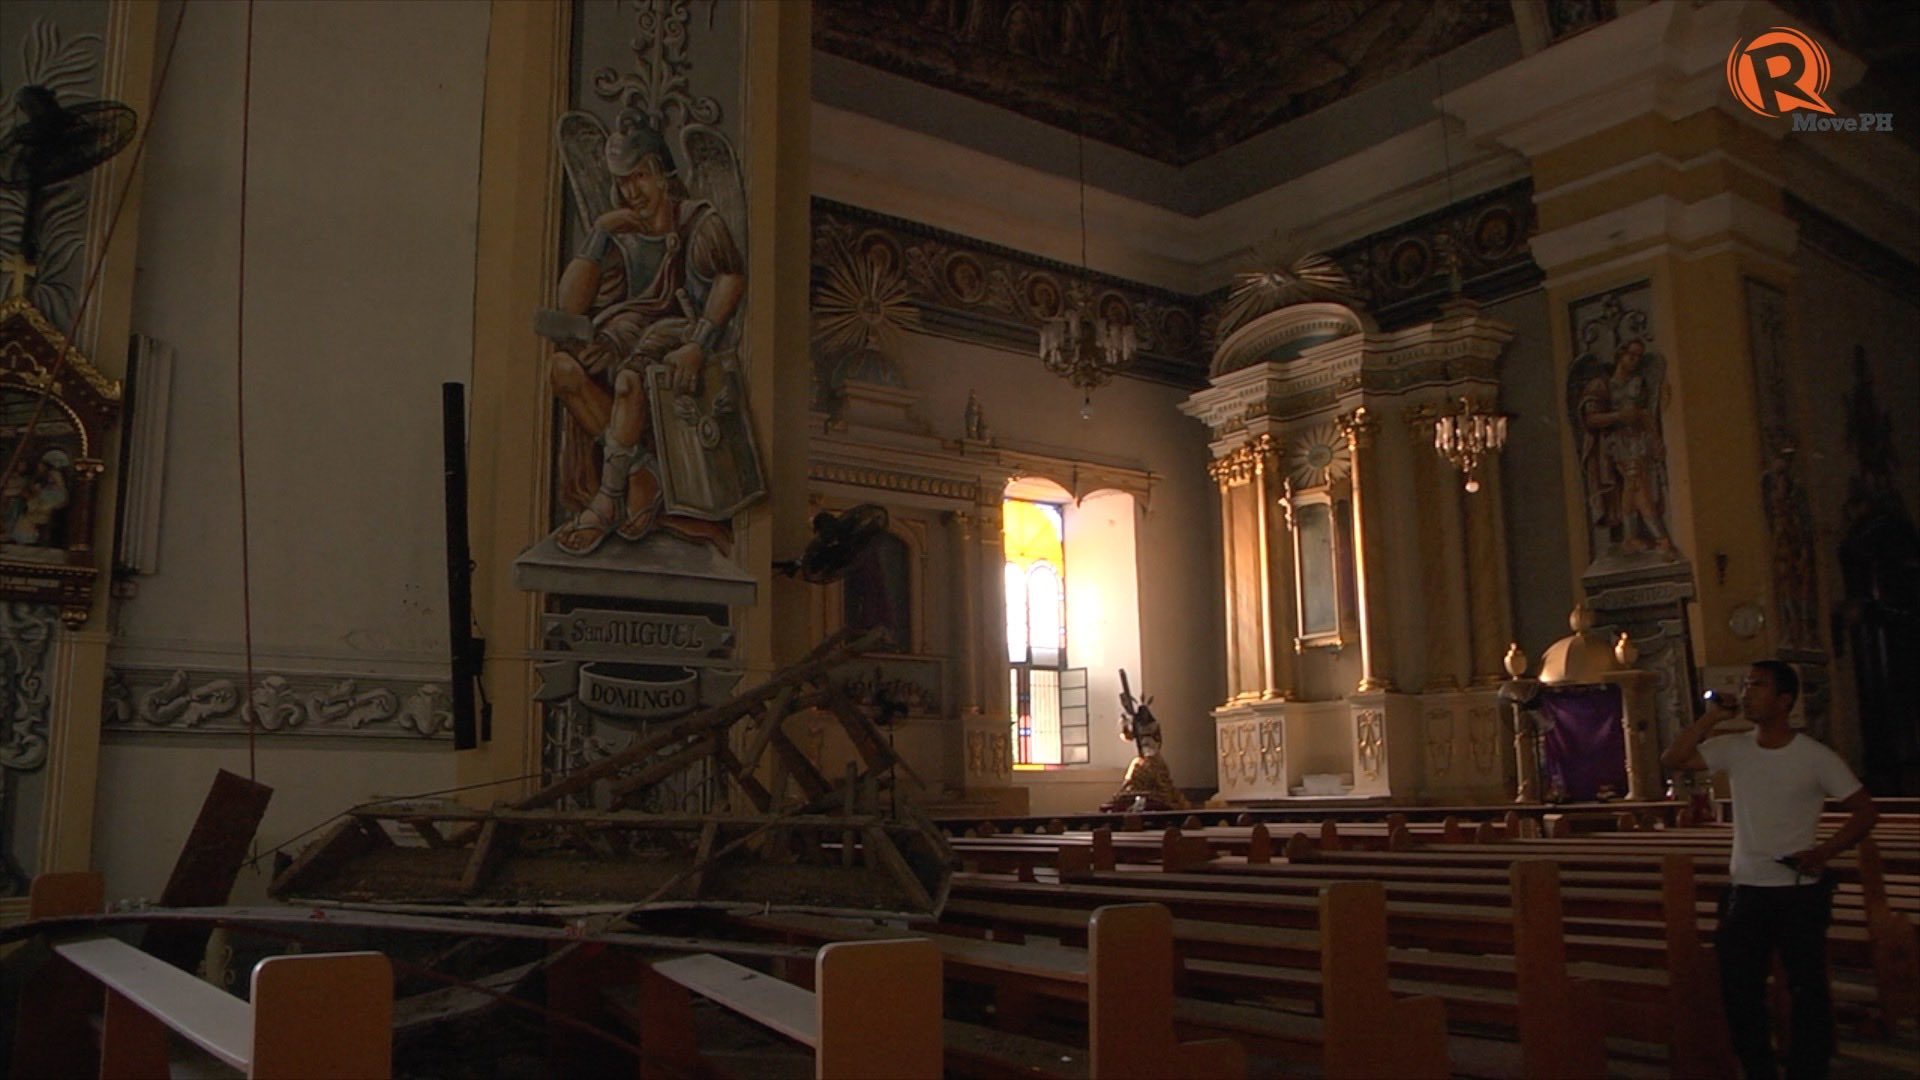 WATCH: Inside the damaged Batangas basilica